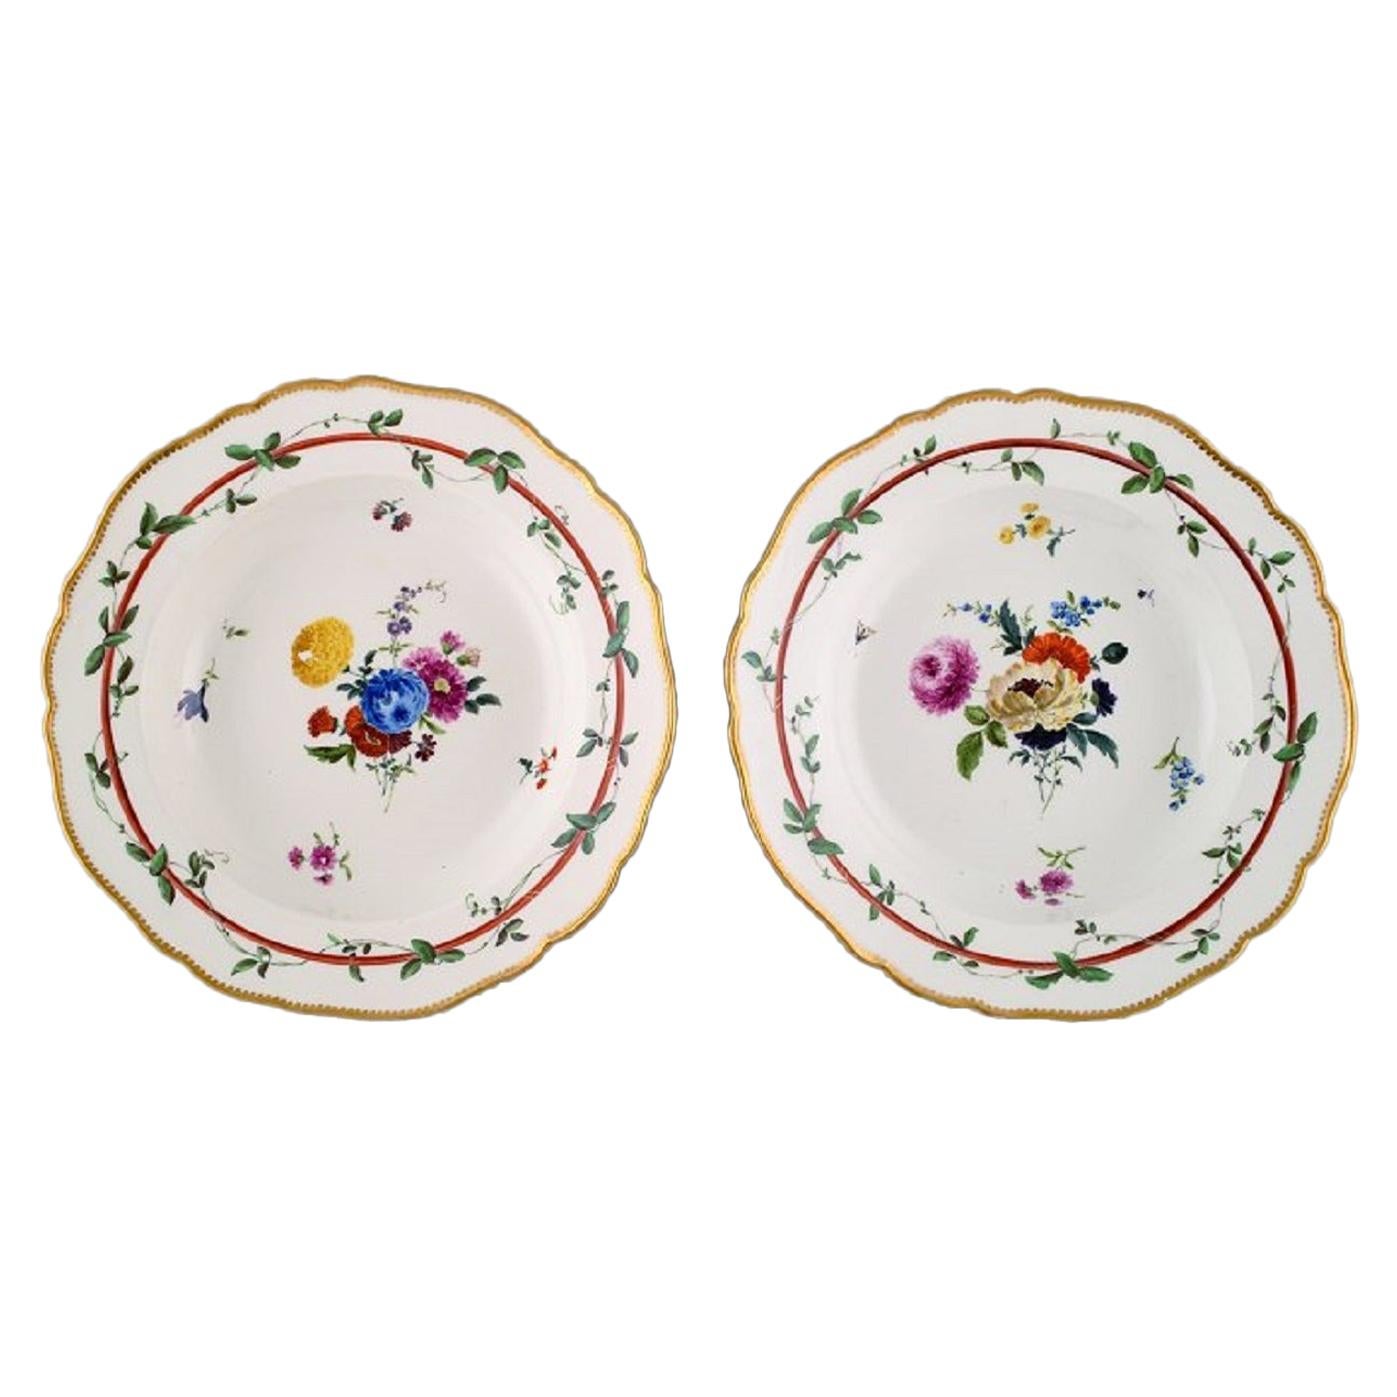 Two Antique Meissen Deep Plates in Pierced Porcelain with Floral Motifs